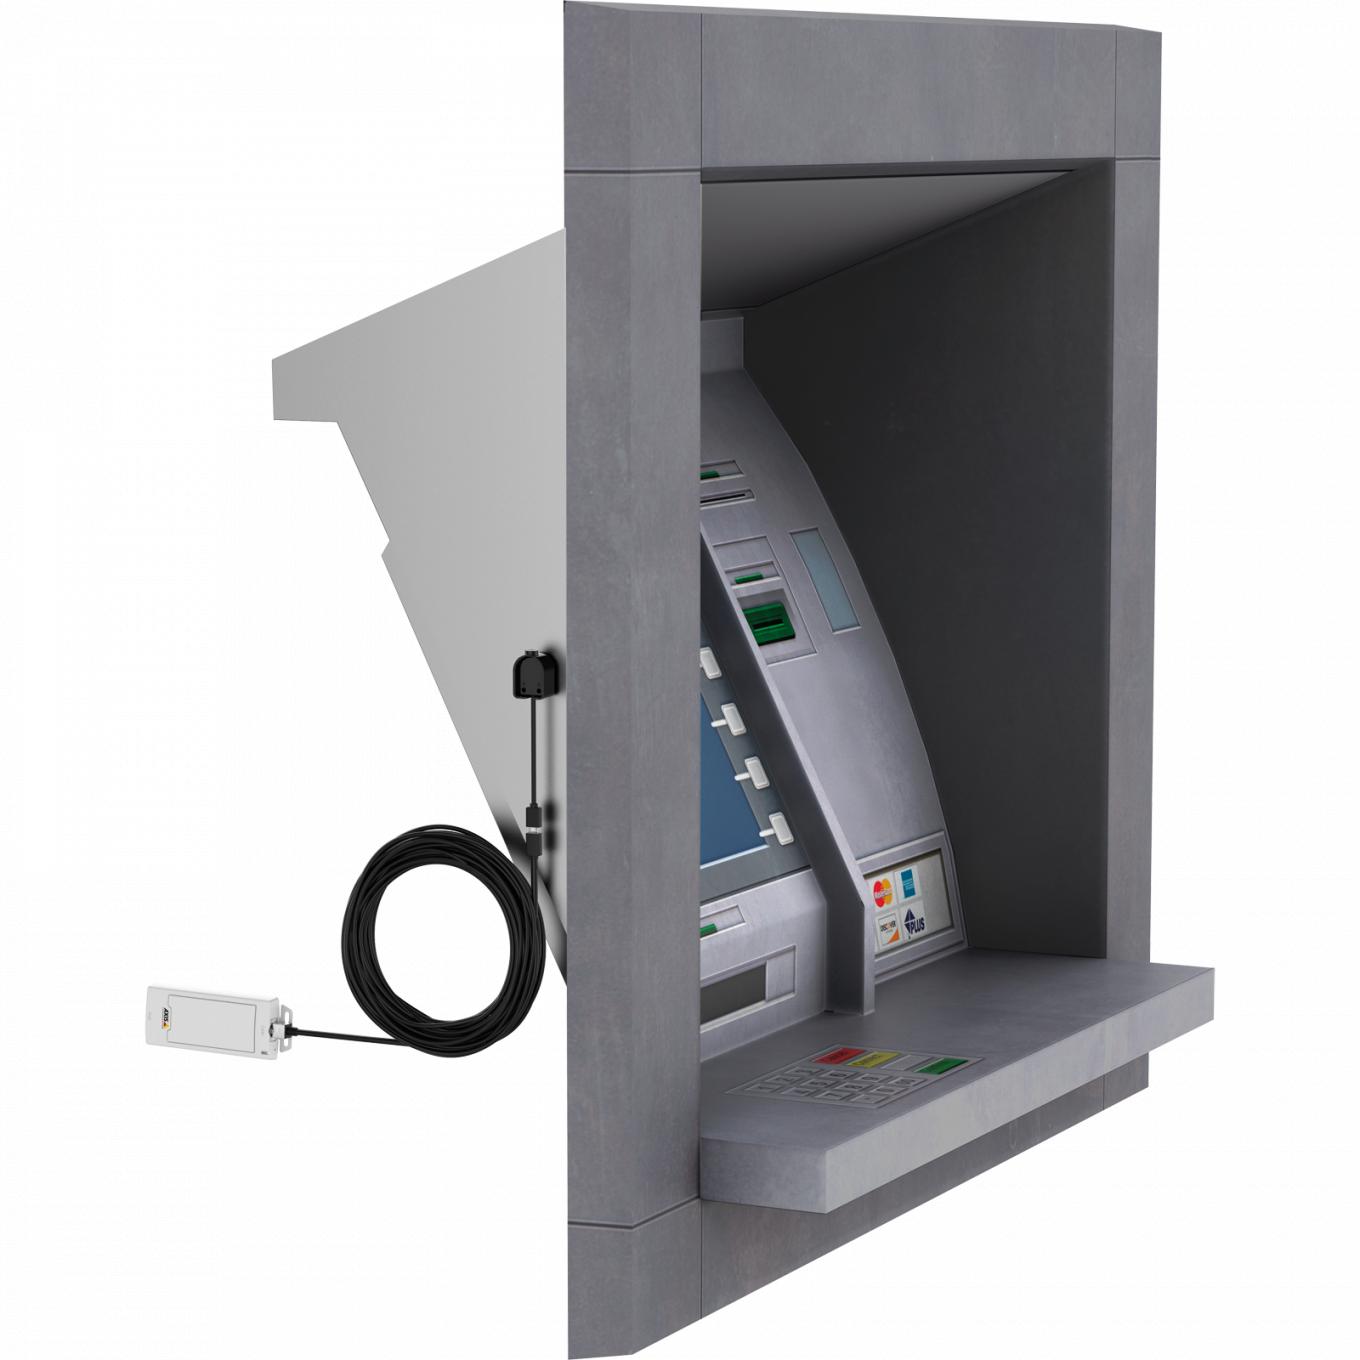 ATMに設置したAXIS P1264 (左から見た図)